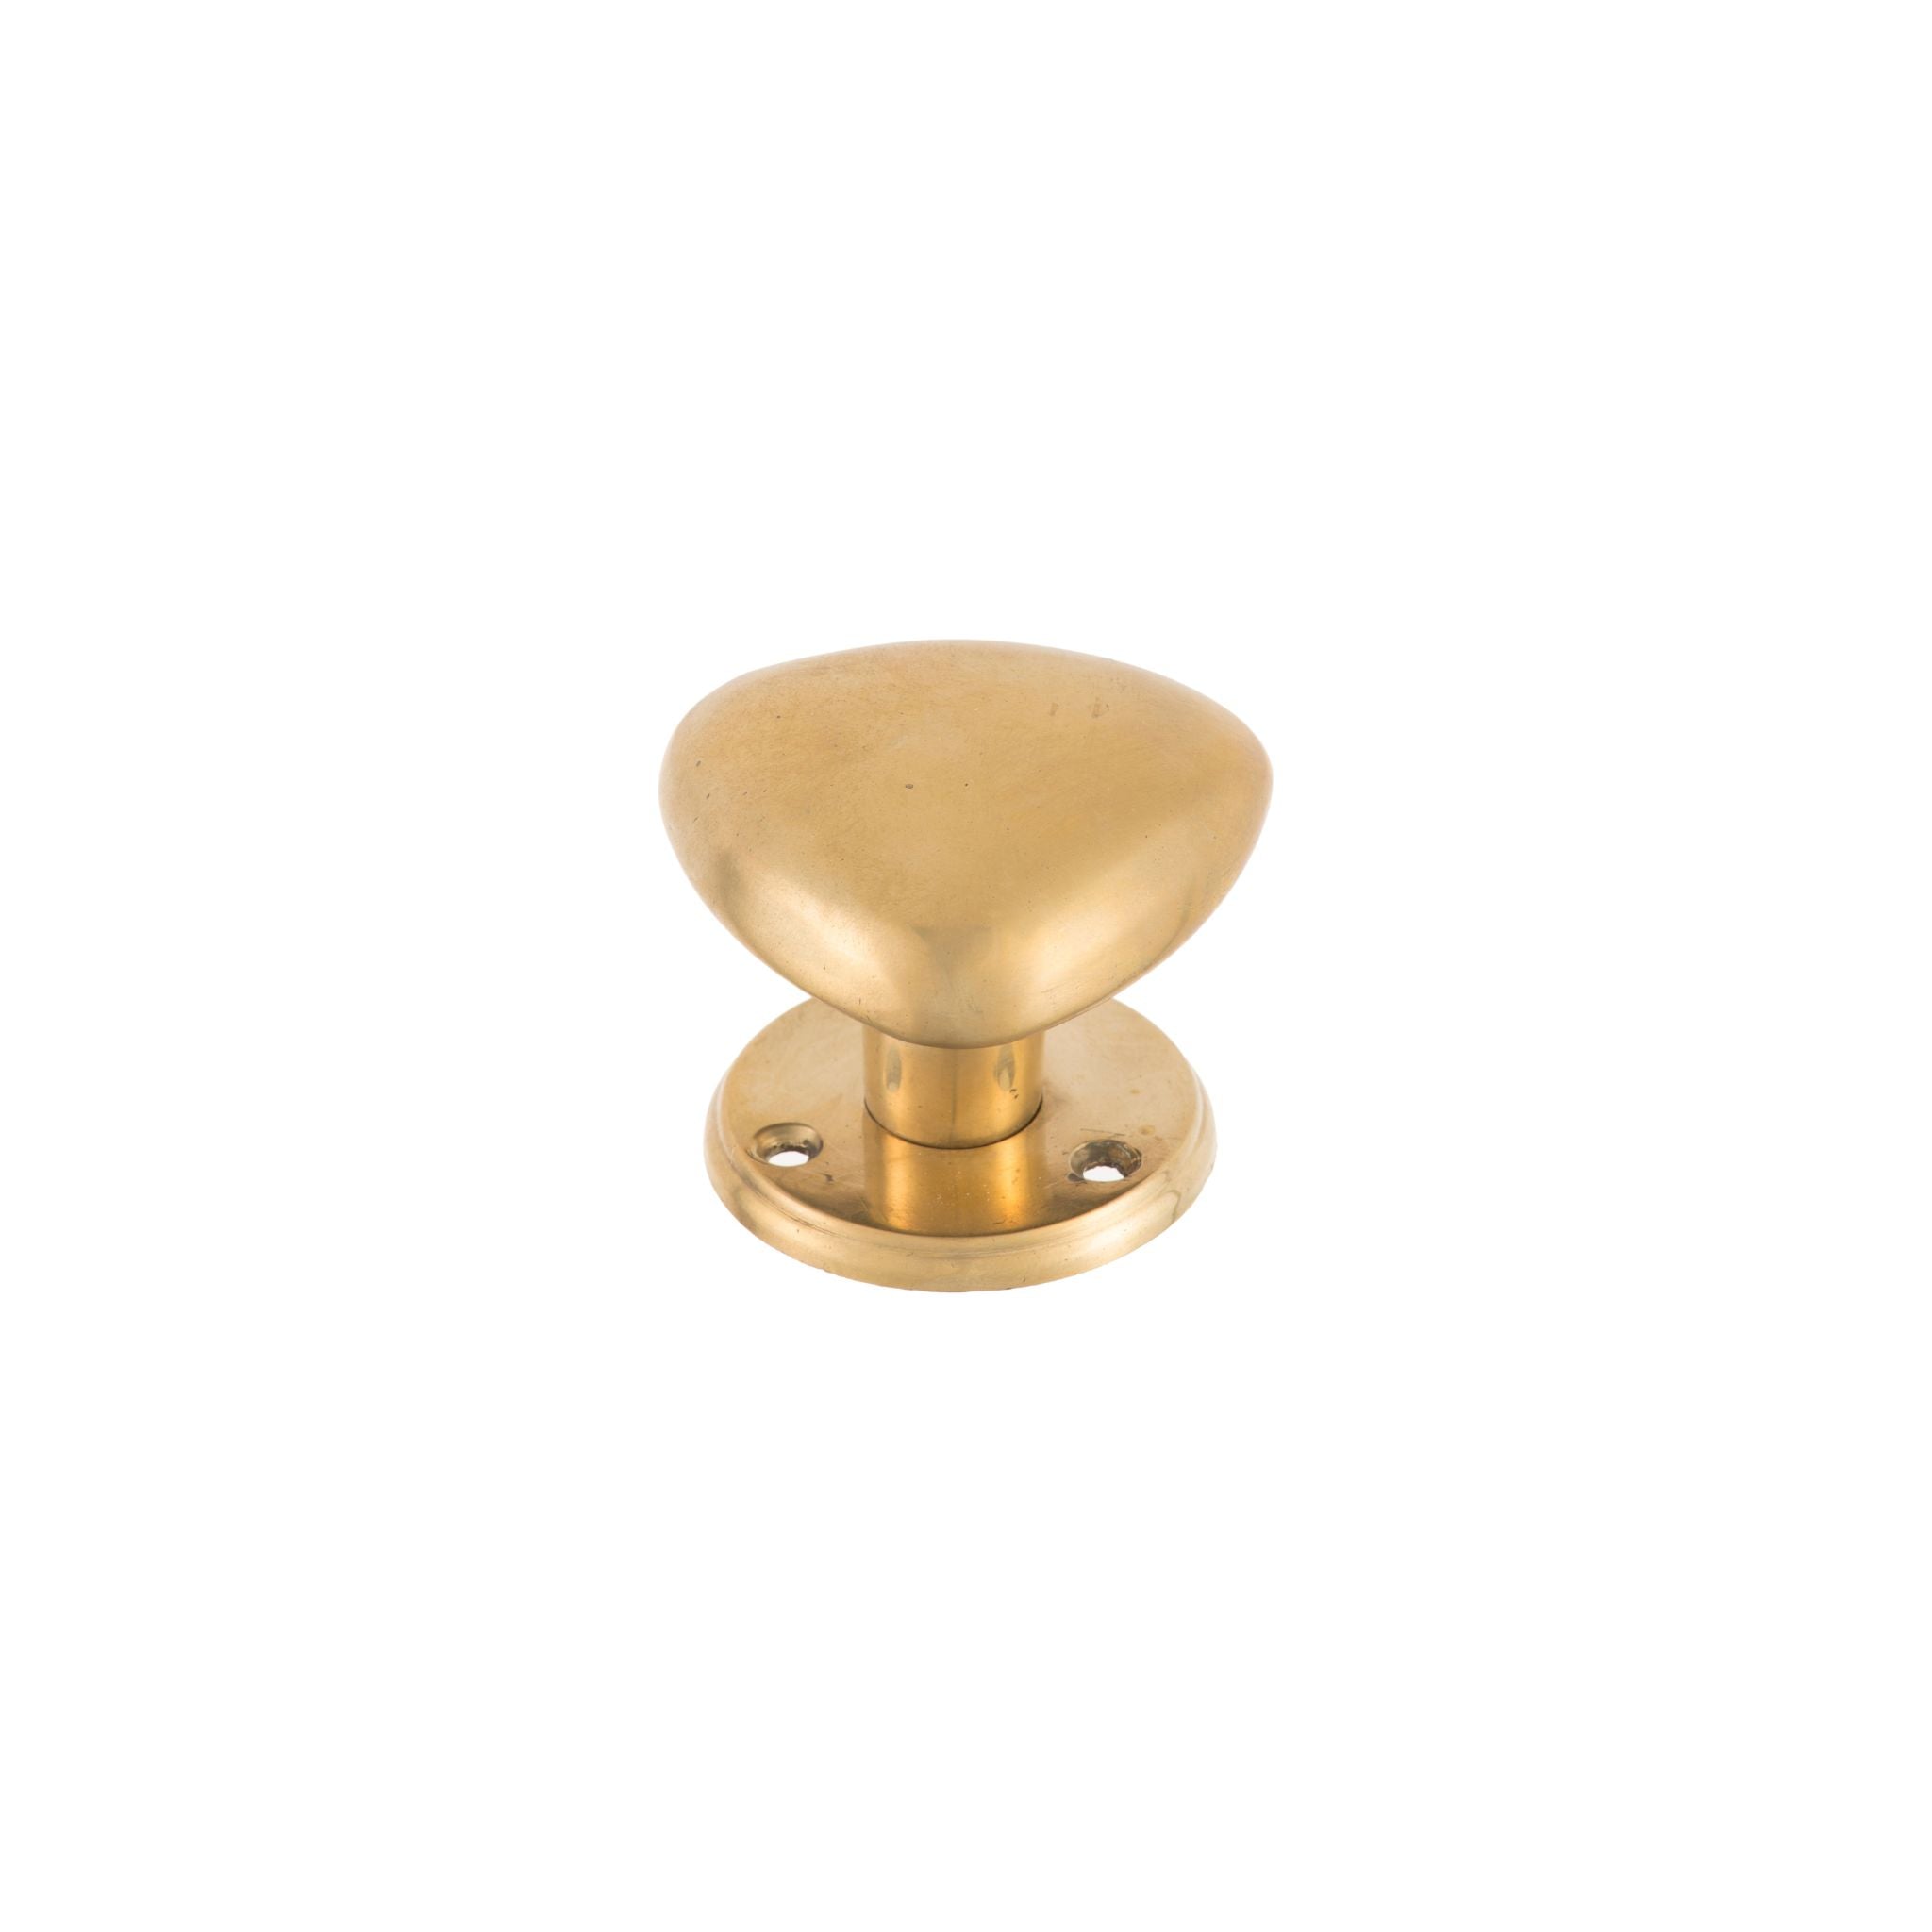 A brass knob shaped like a triangle, adding modern geometric flair to your decor.